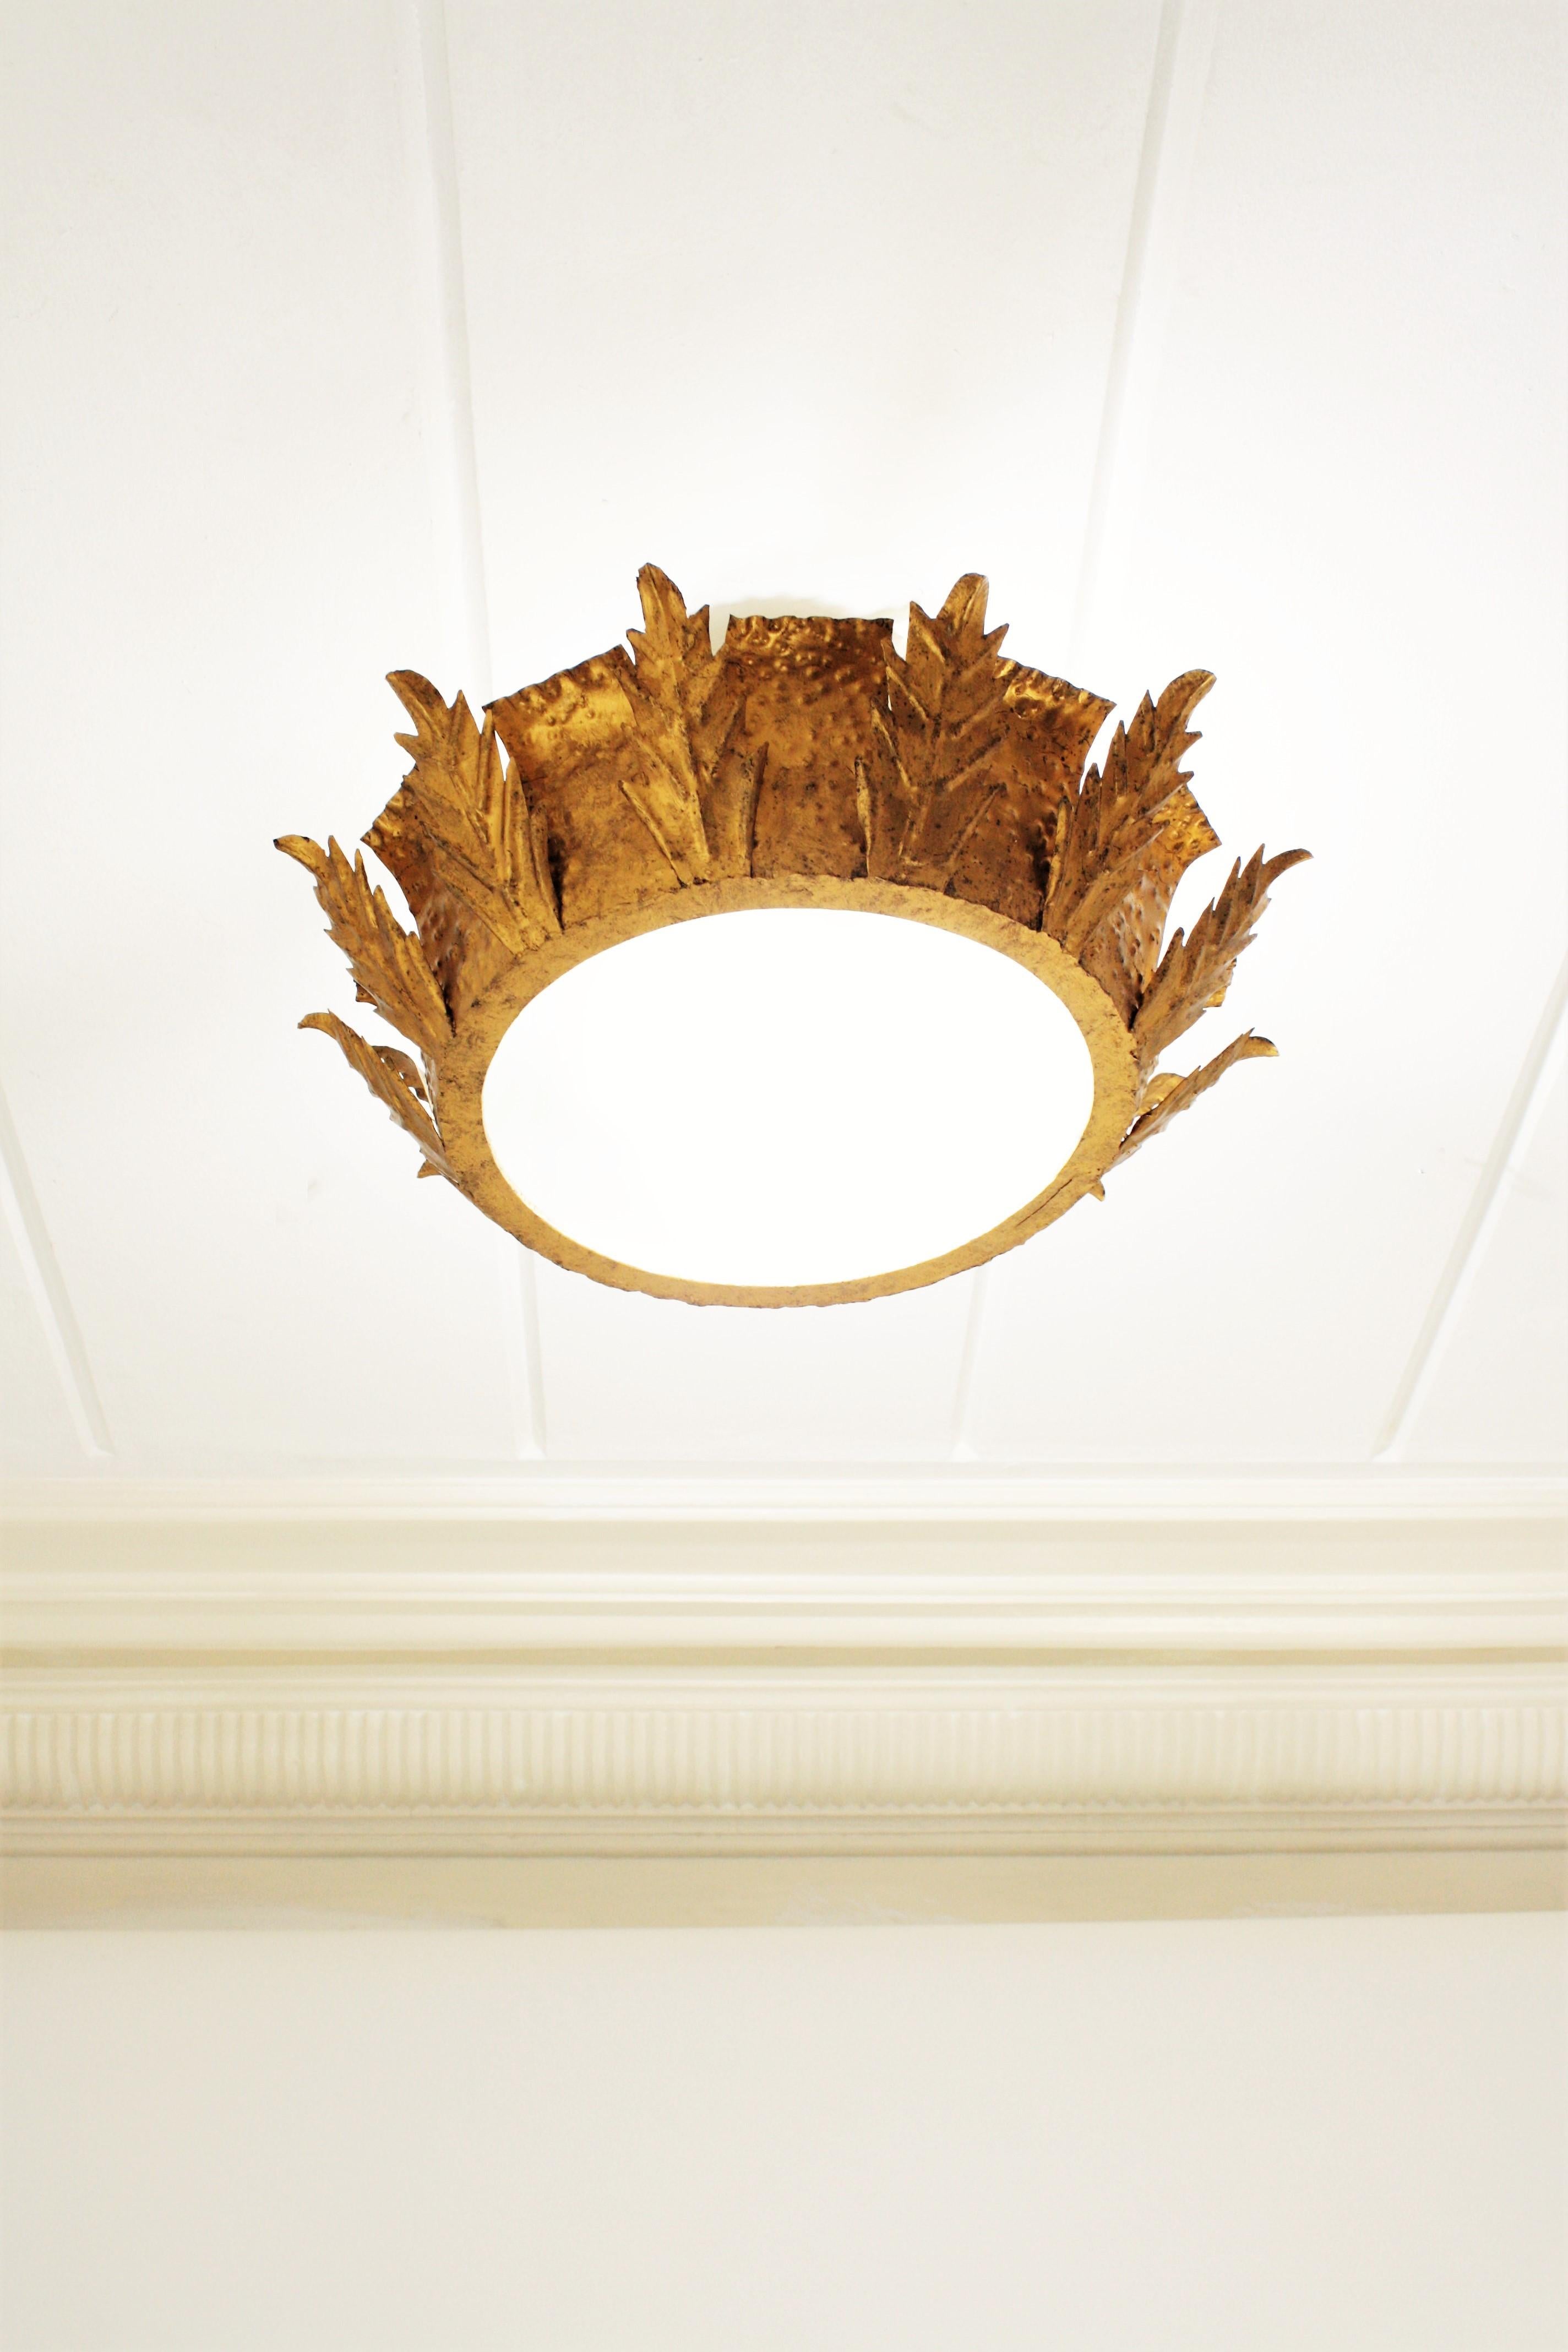 Brutalist Crown Sunburst Ceiling Light Fixture in Gilt Iron & Frosted Glass 1